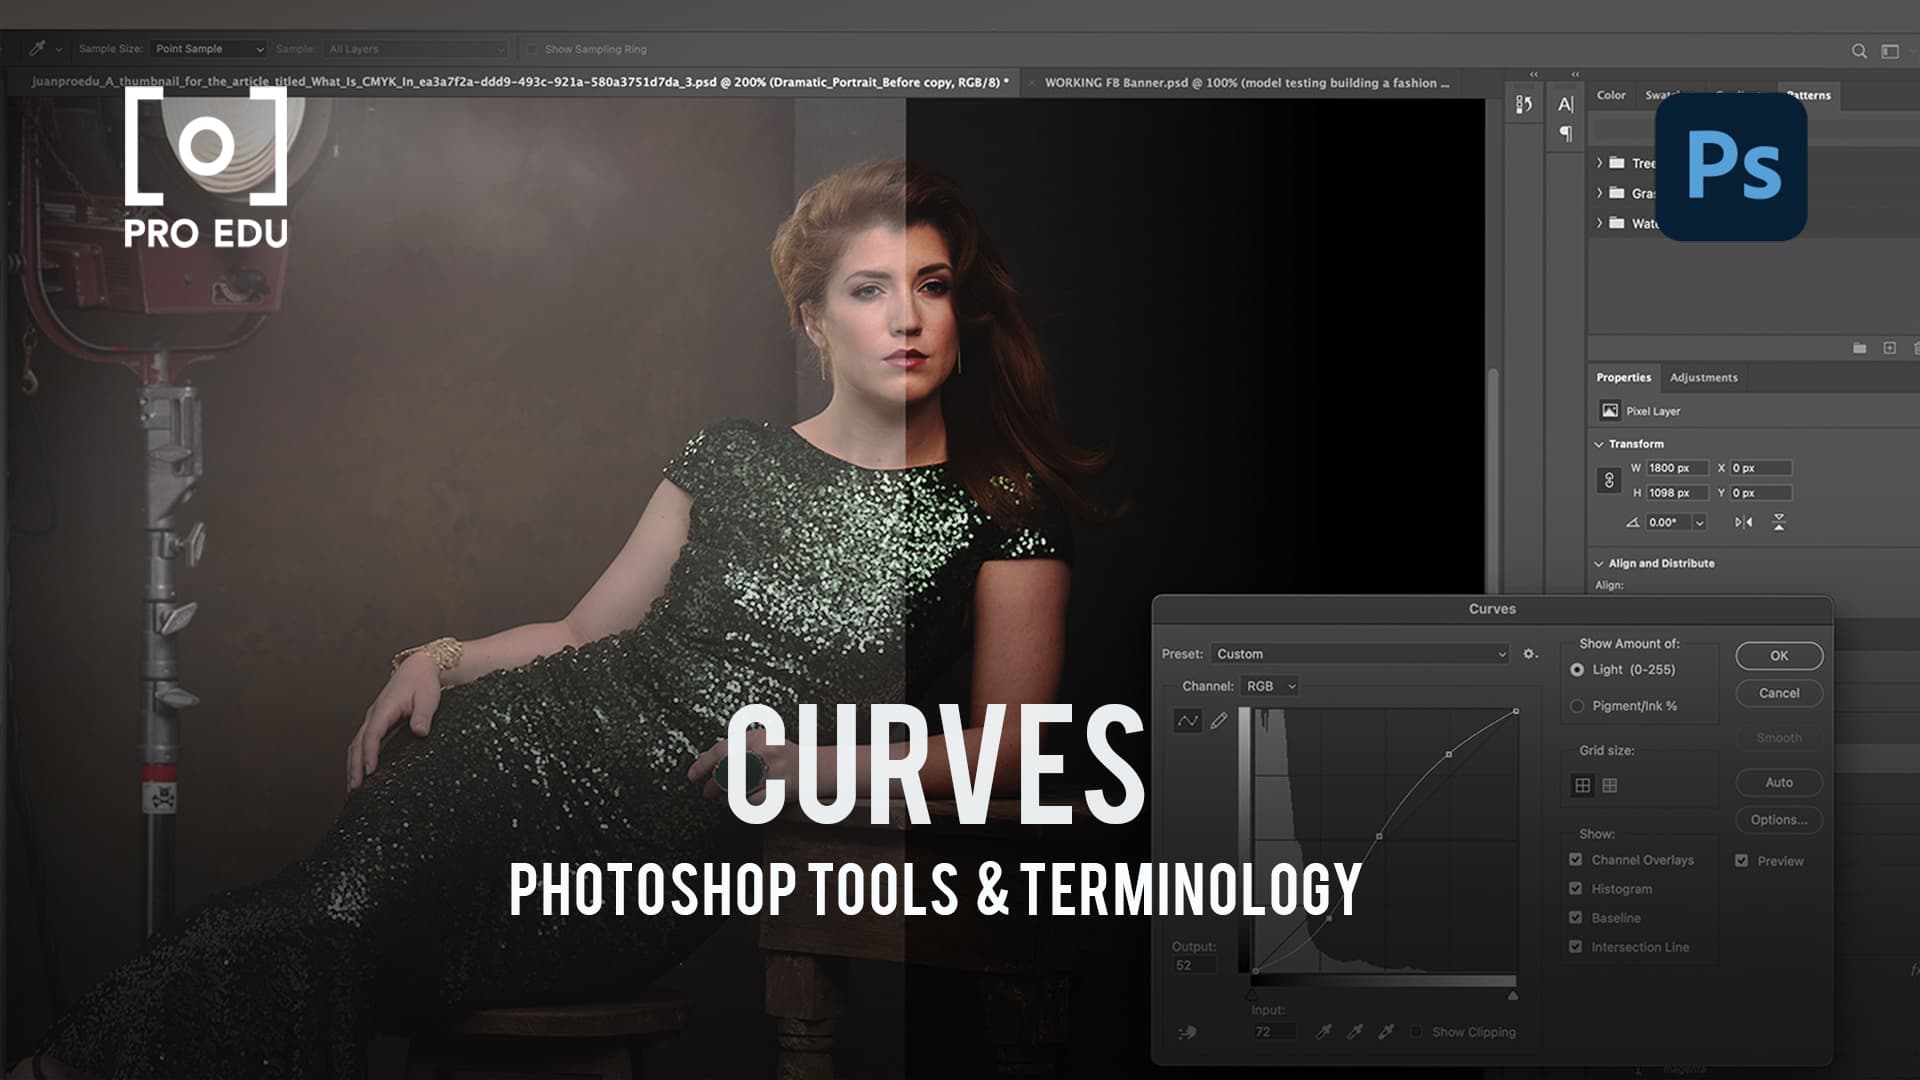 Curves Adjustment in Photoshop - PRO EDU Guide